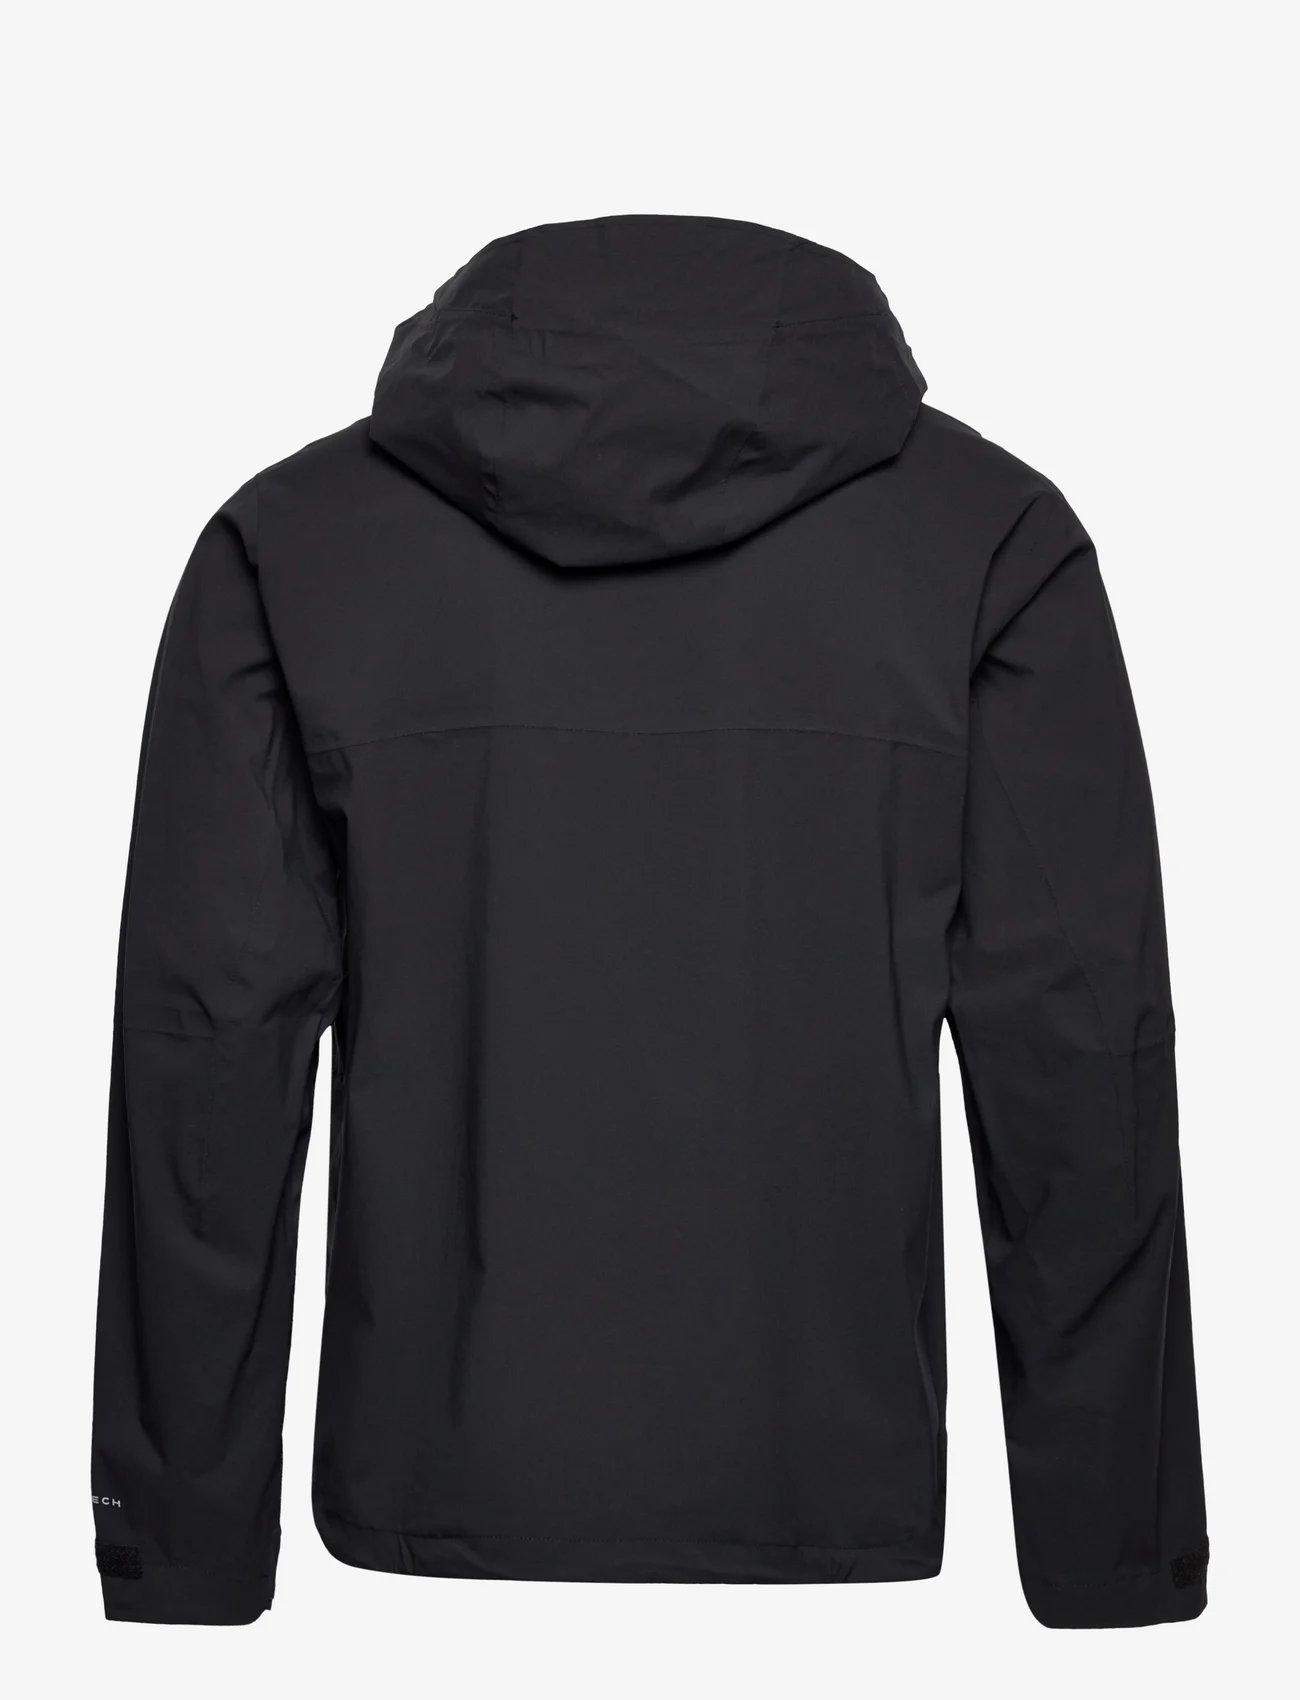 Columbia Sportswear - Omni-Tech Ampli-Dry Shell - outdoor & rain jackets - black - 1